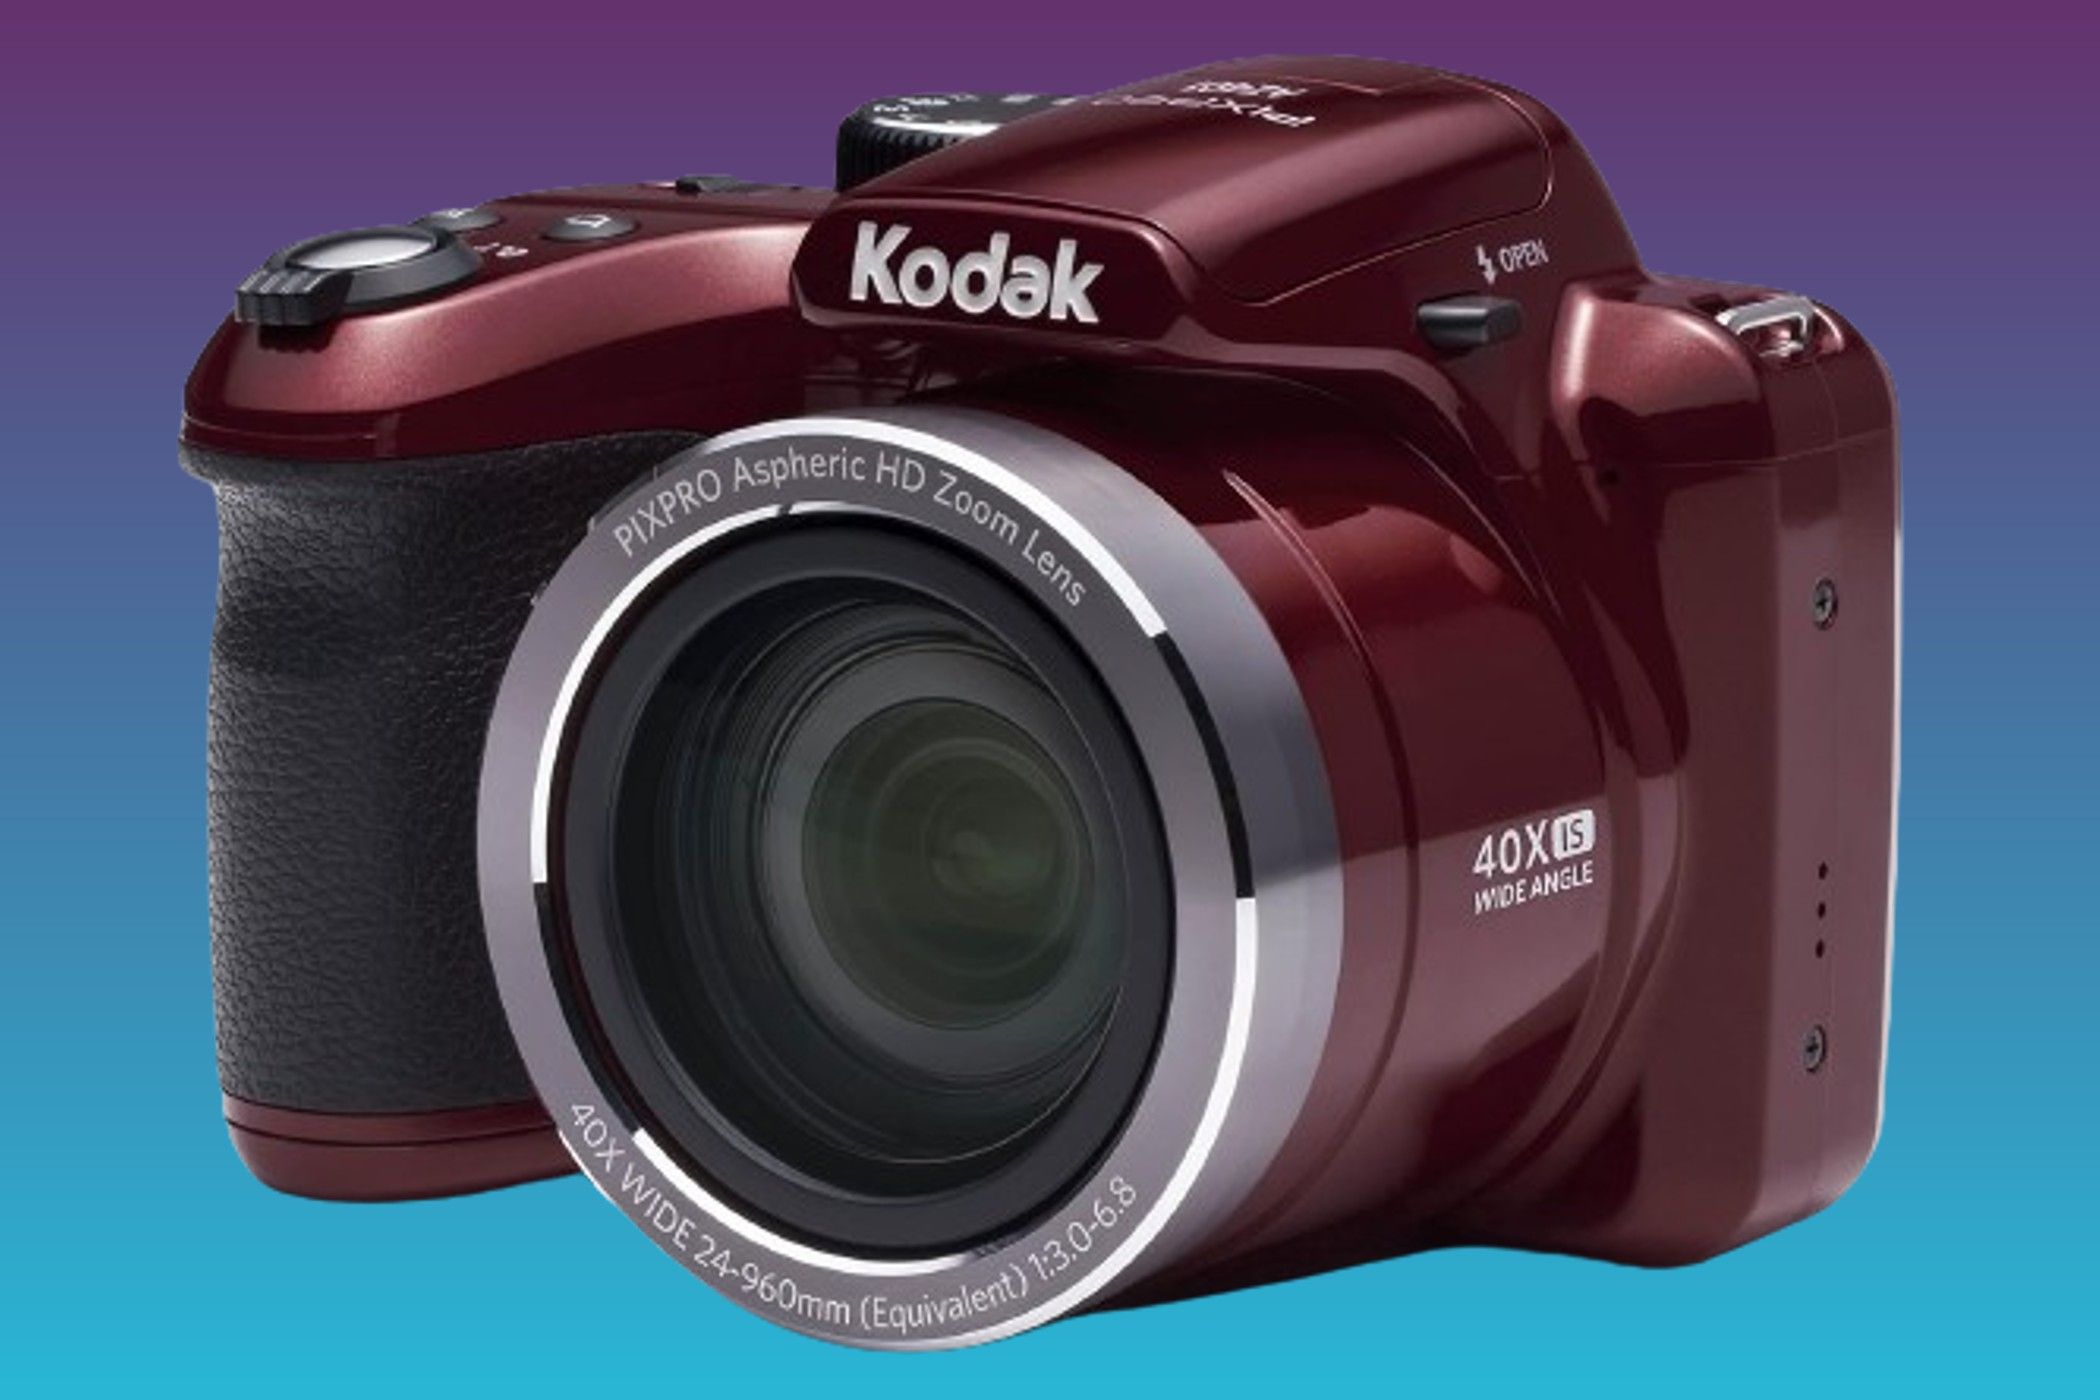 Kodak AZ401RD Point and Shoot Camera on a gradient background